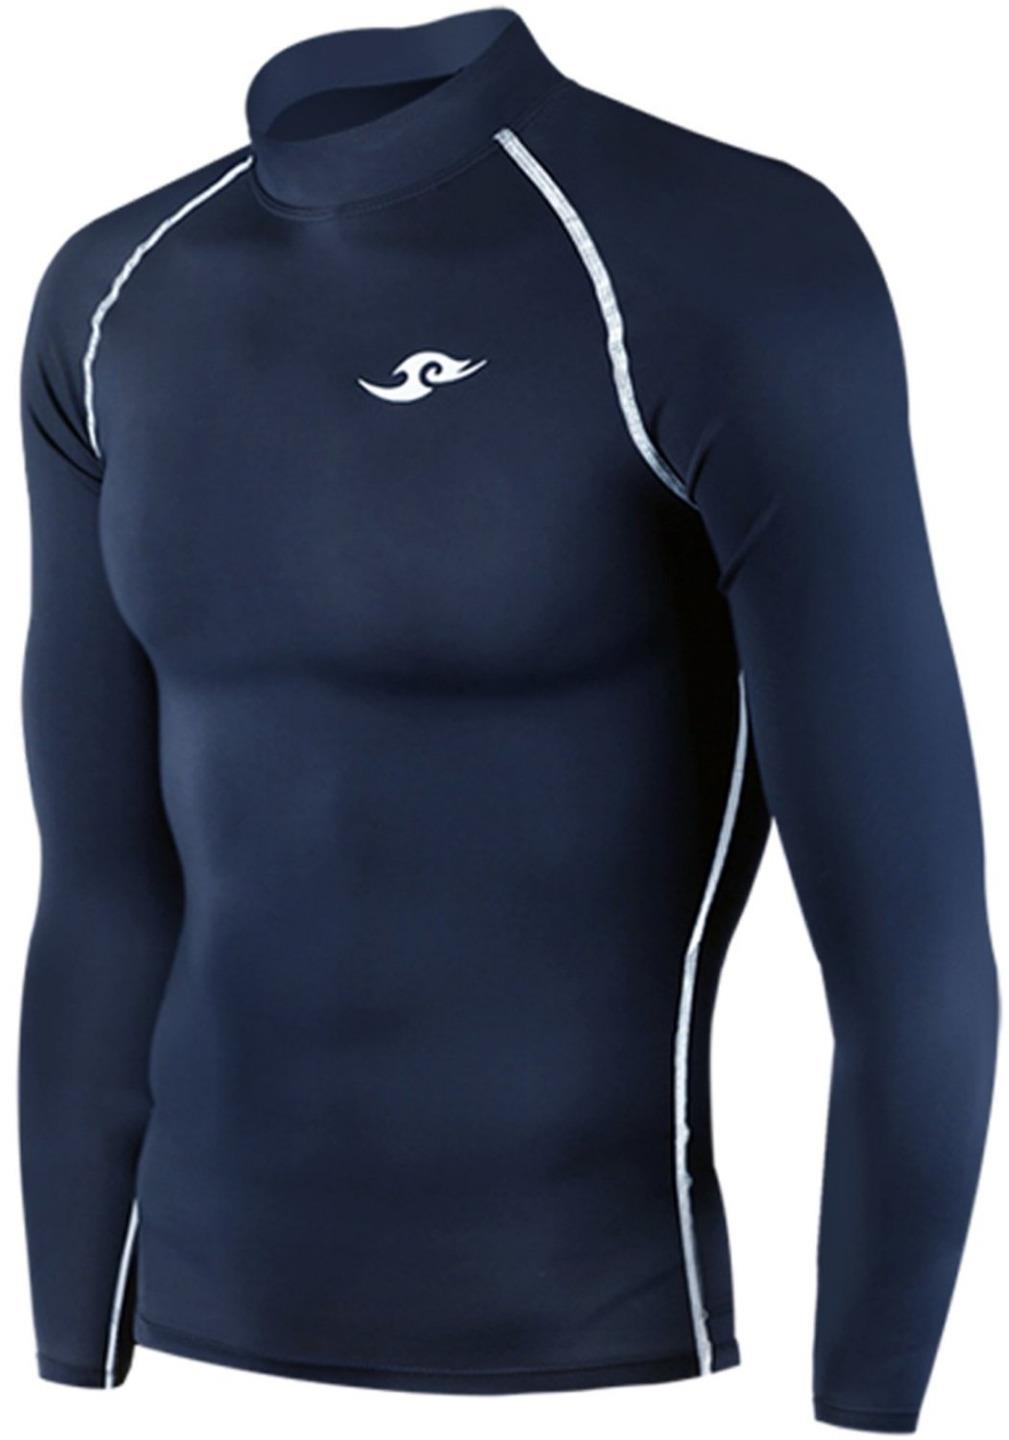 Take Five Mens Compression Baselayer Gym Long Sleeve Top Shirt Running Baseball | eBay